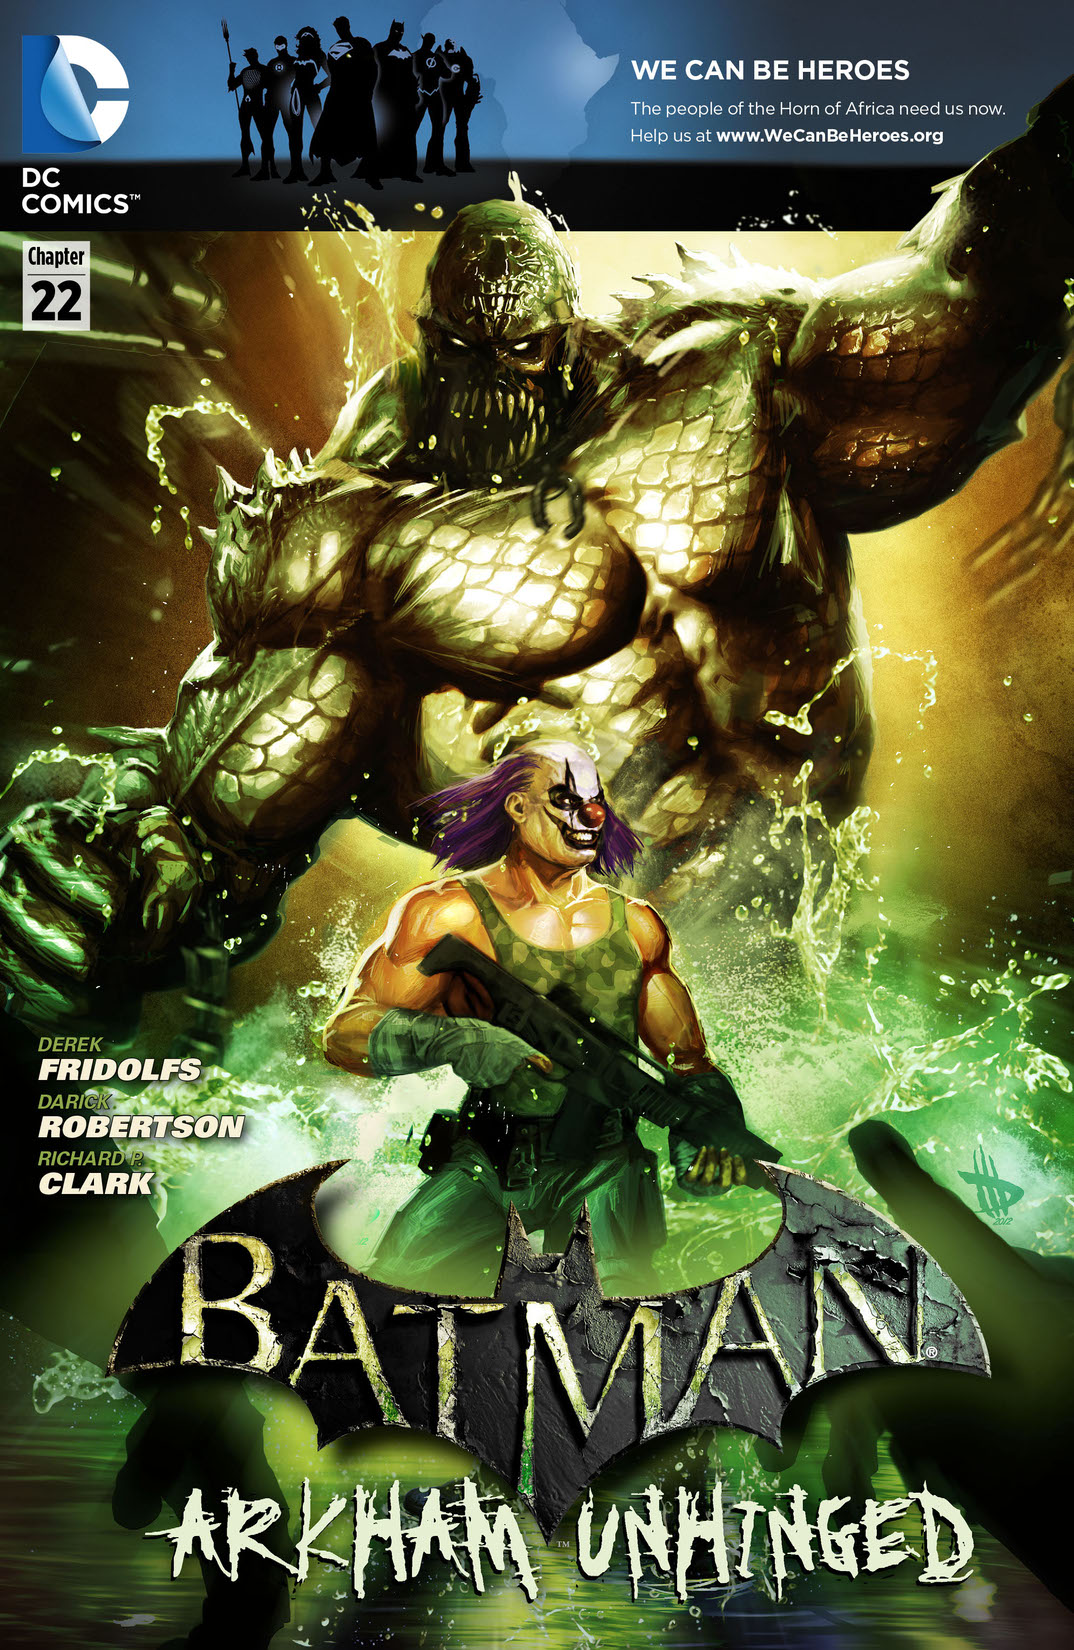 Batman: Arkham Unhinged #22 preview images